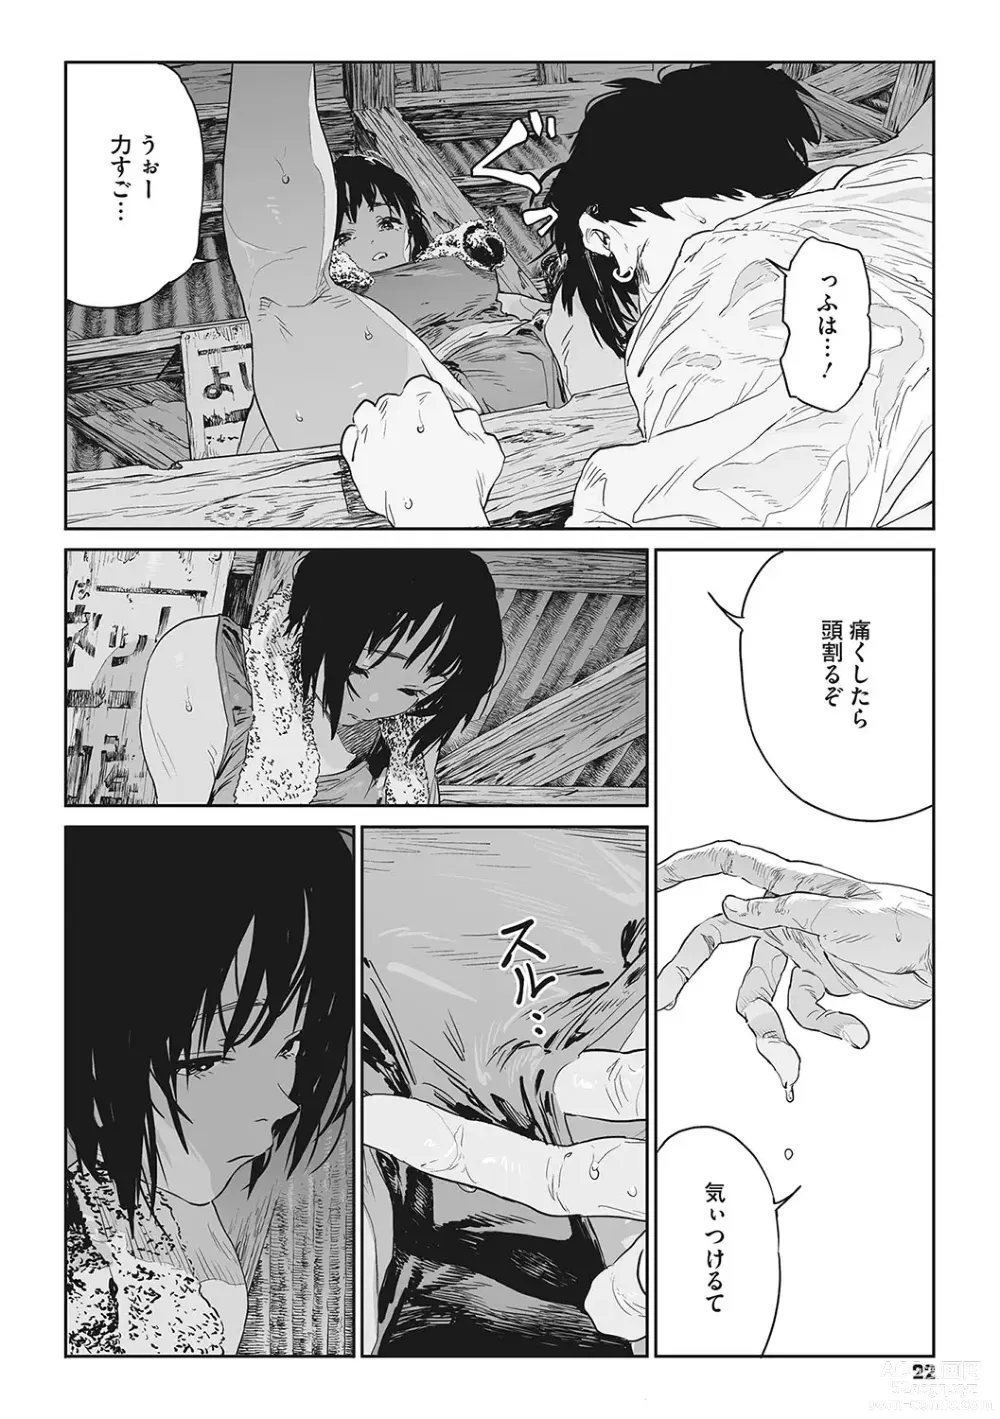 Page 21 of manga Ito o Yoru